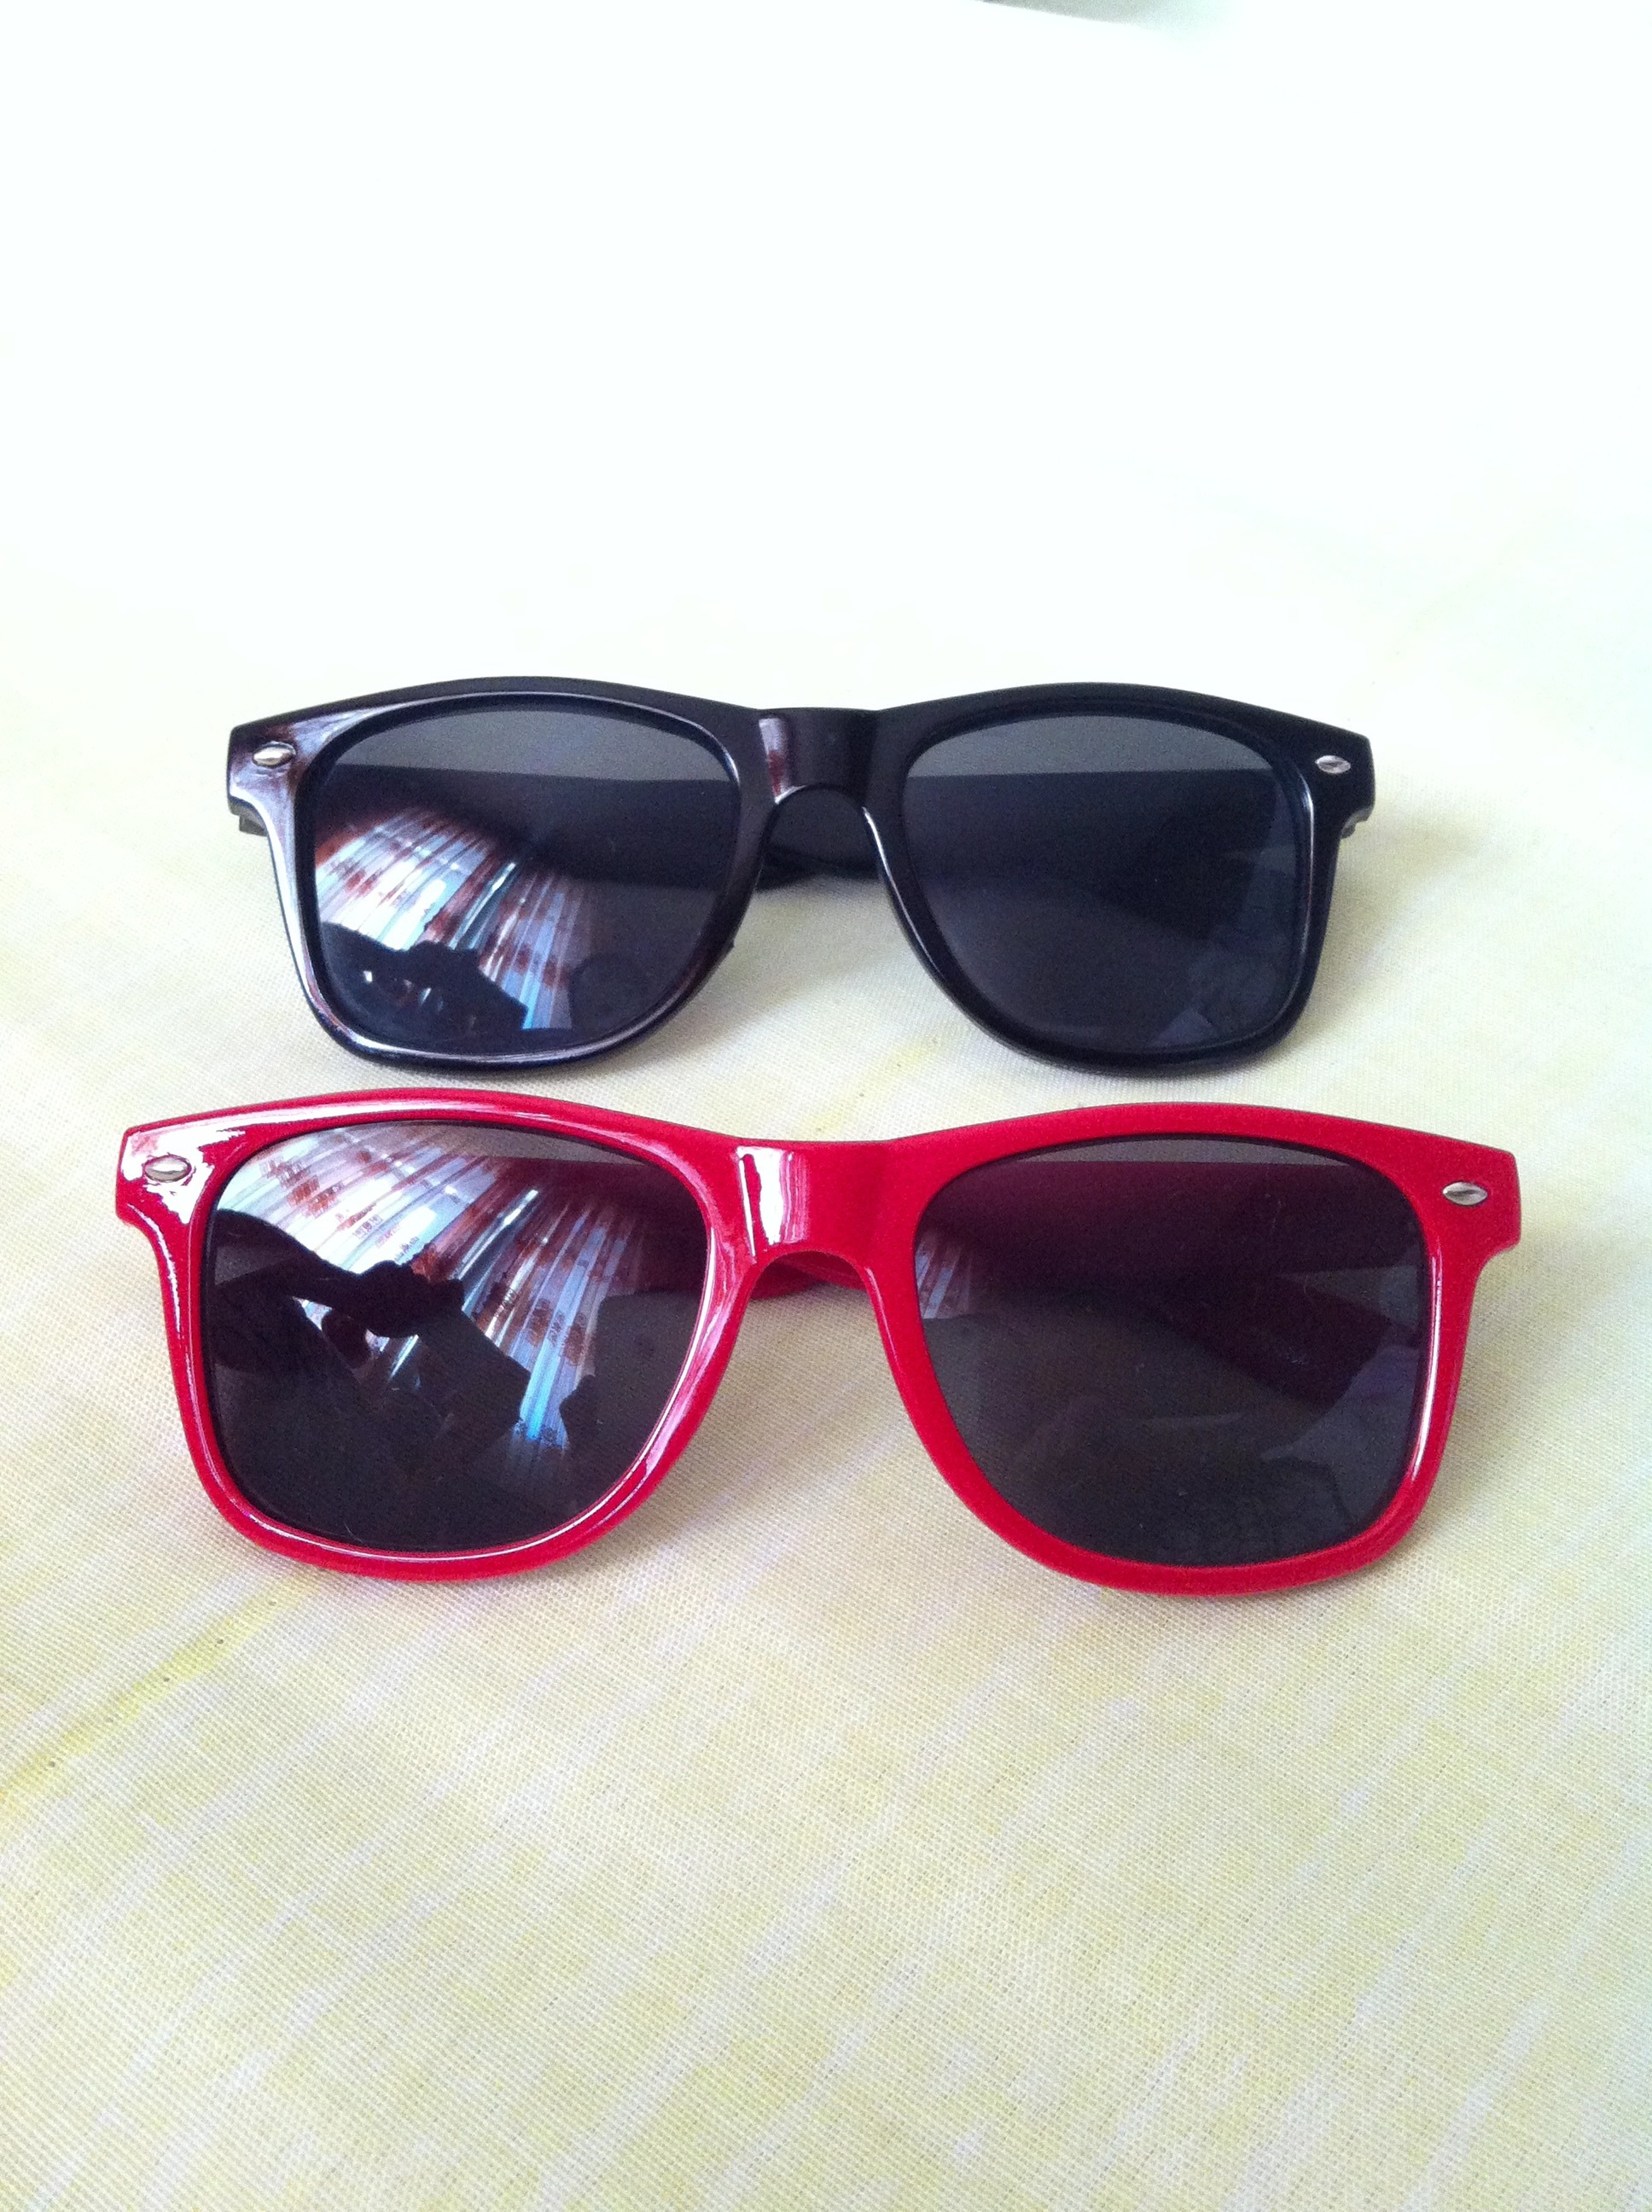 2 sunglasses